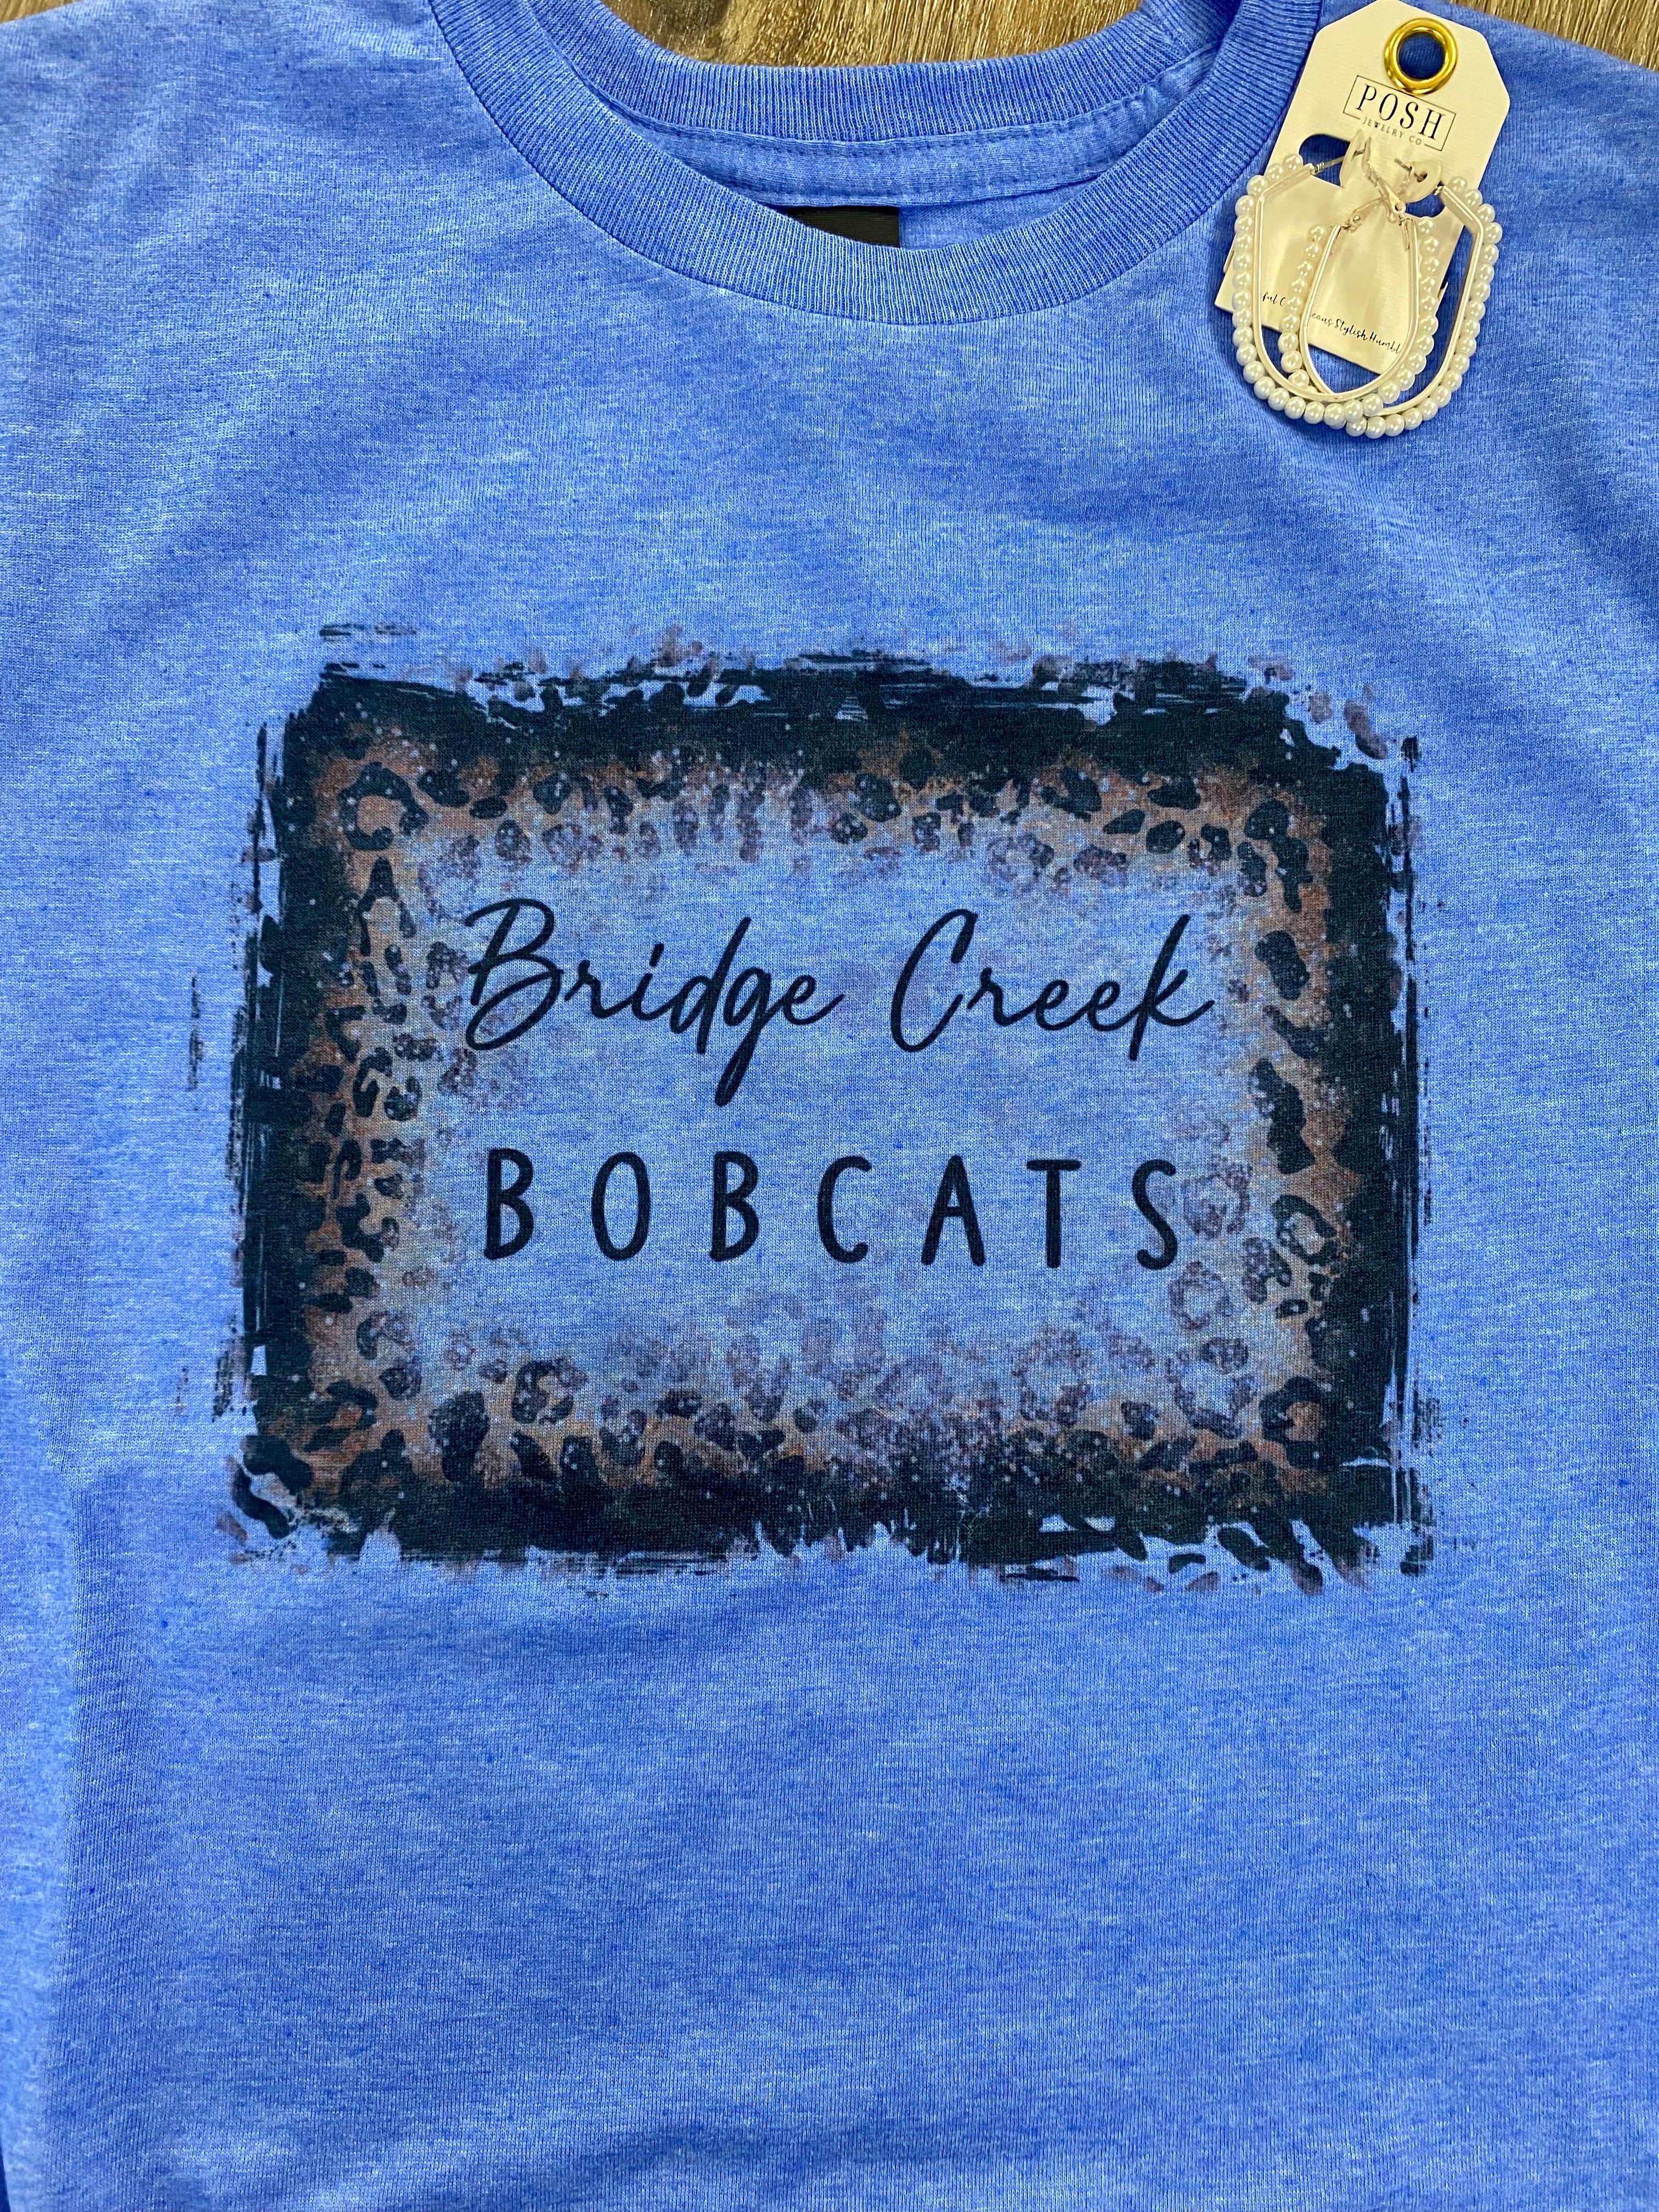 Bobcats tee